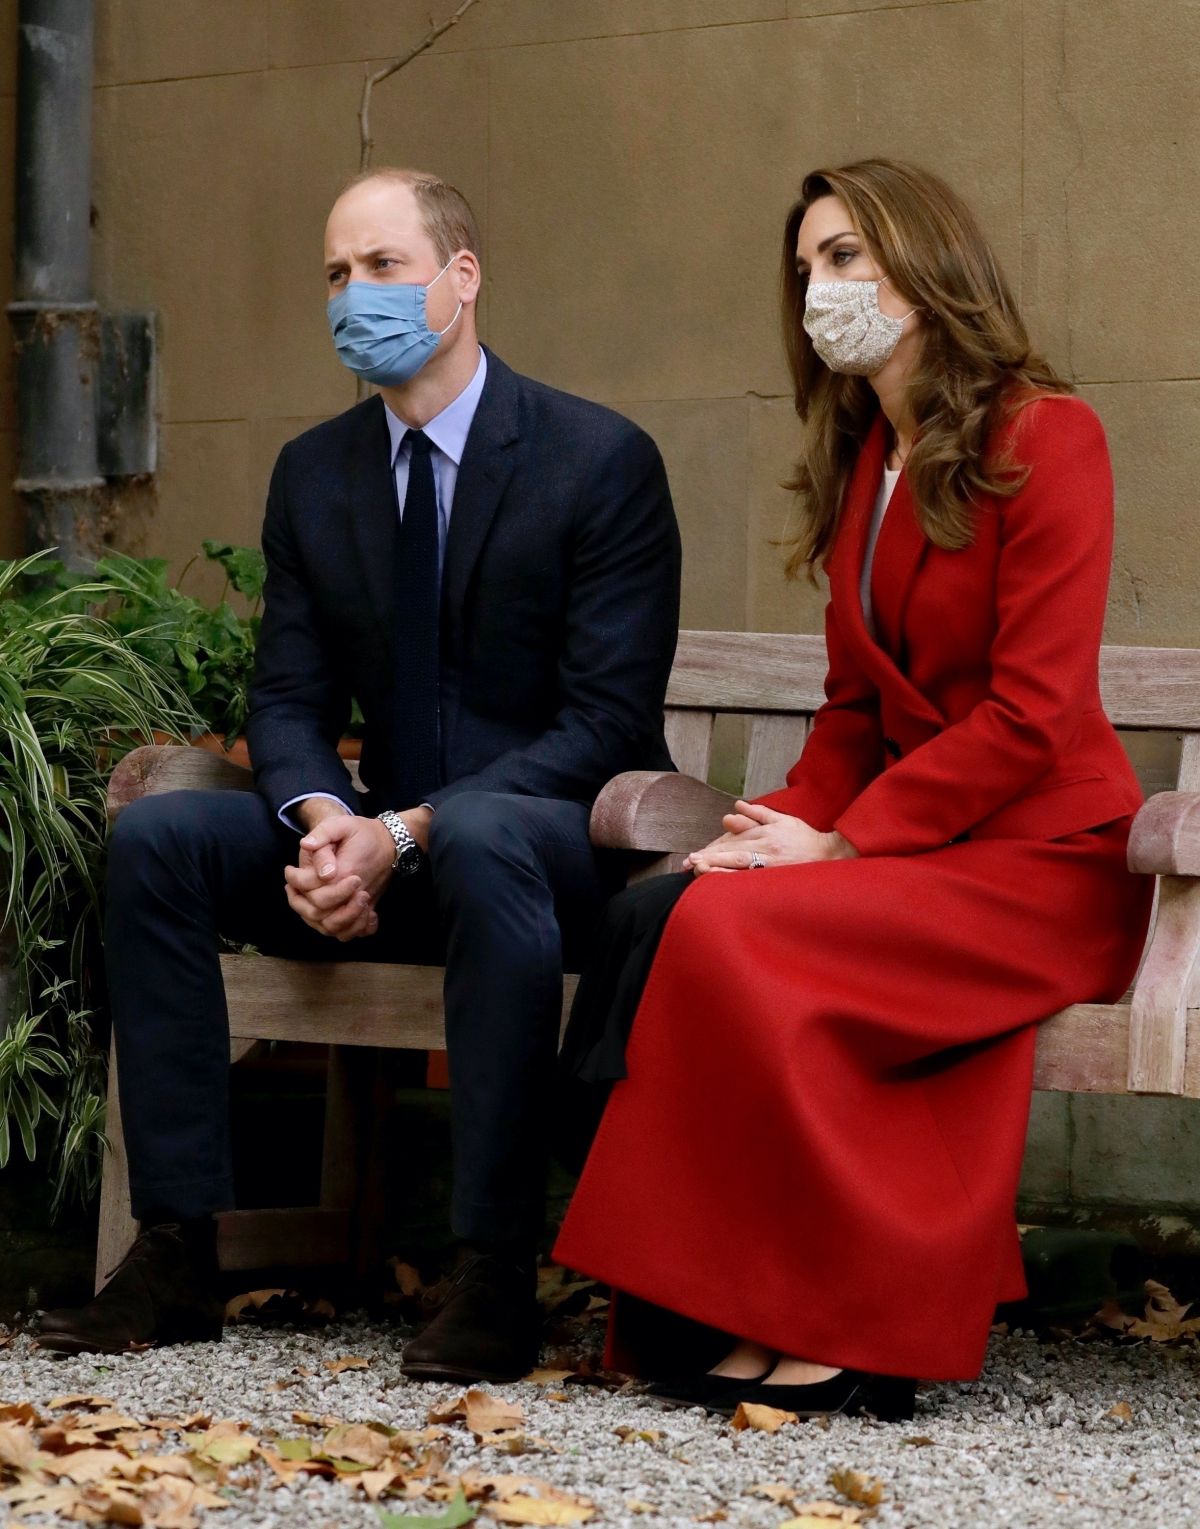 Kate Middleton and Prince William at St. Bartholomew's Hospital in London 2020/10/20